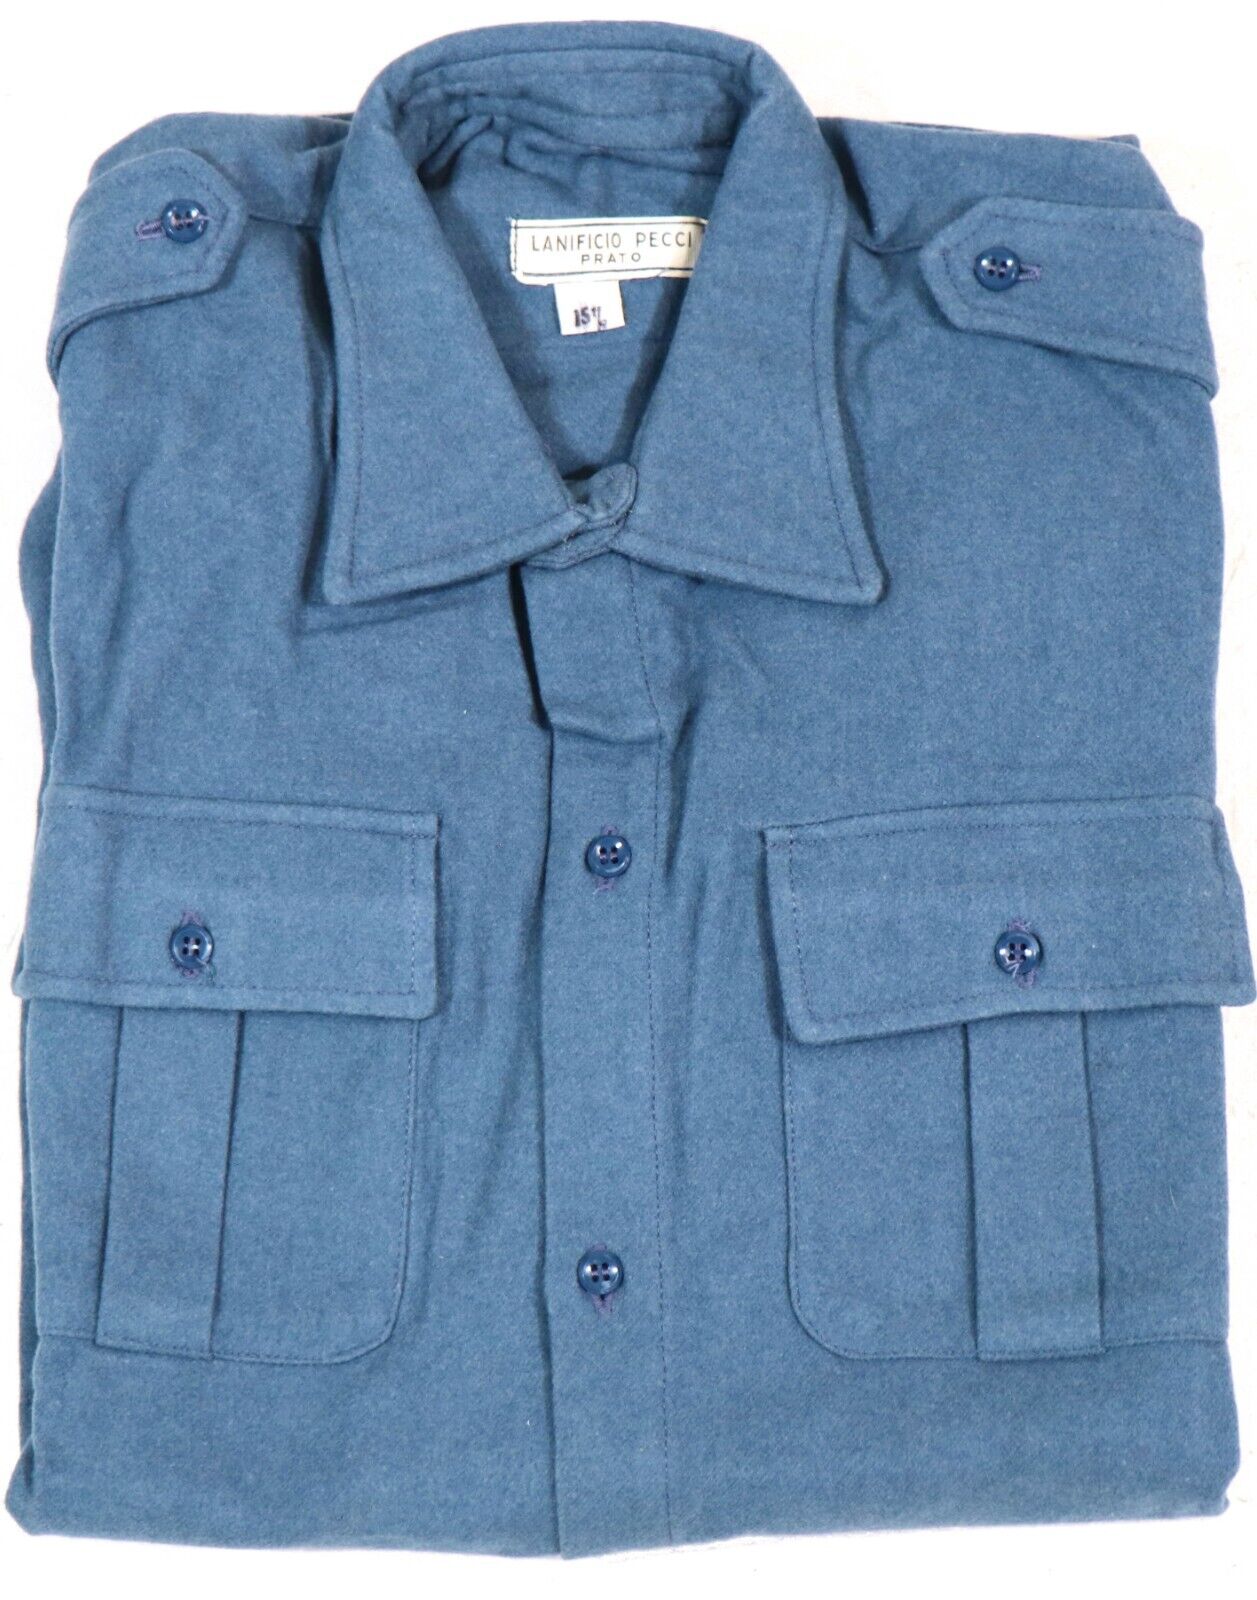 Medium - Authentic Italian Army Shirt Grey Blue Italy Military Surplus Jacket